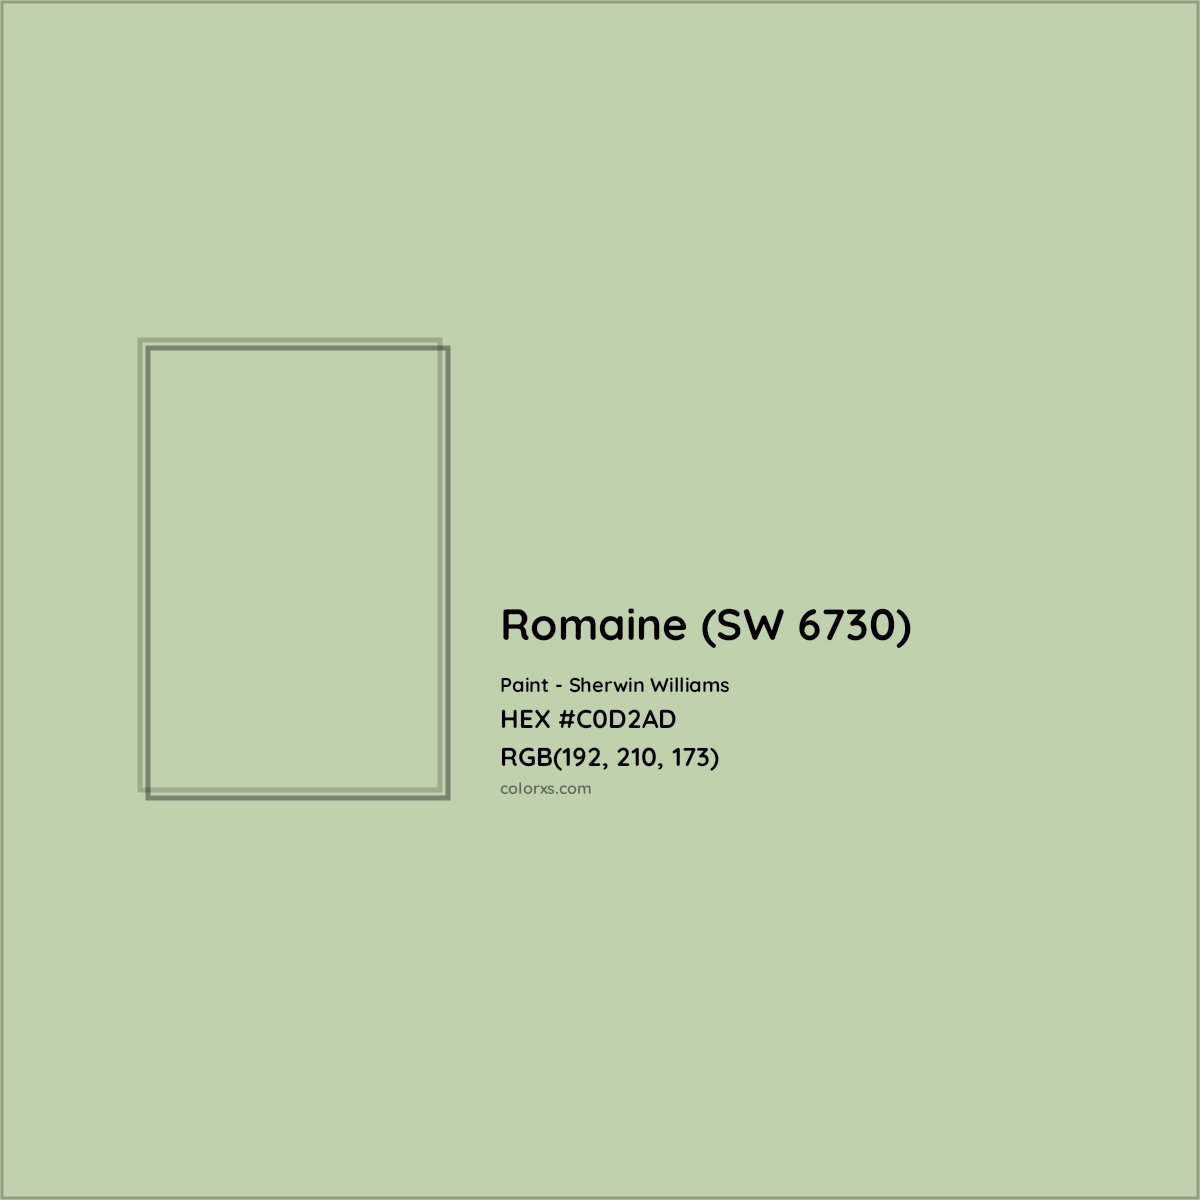 HEX #C0D2AD Romaine (SW 6730) Paint Sherwin Williams - Color Code